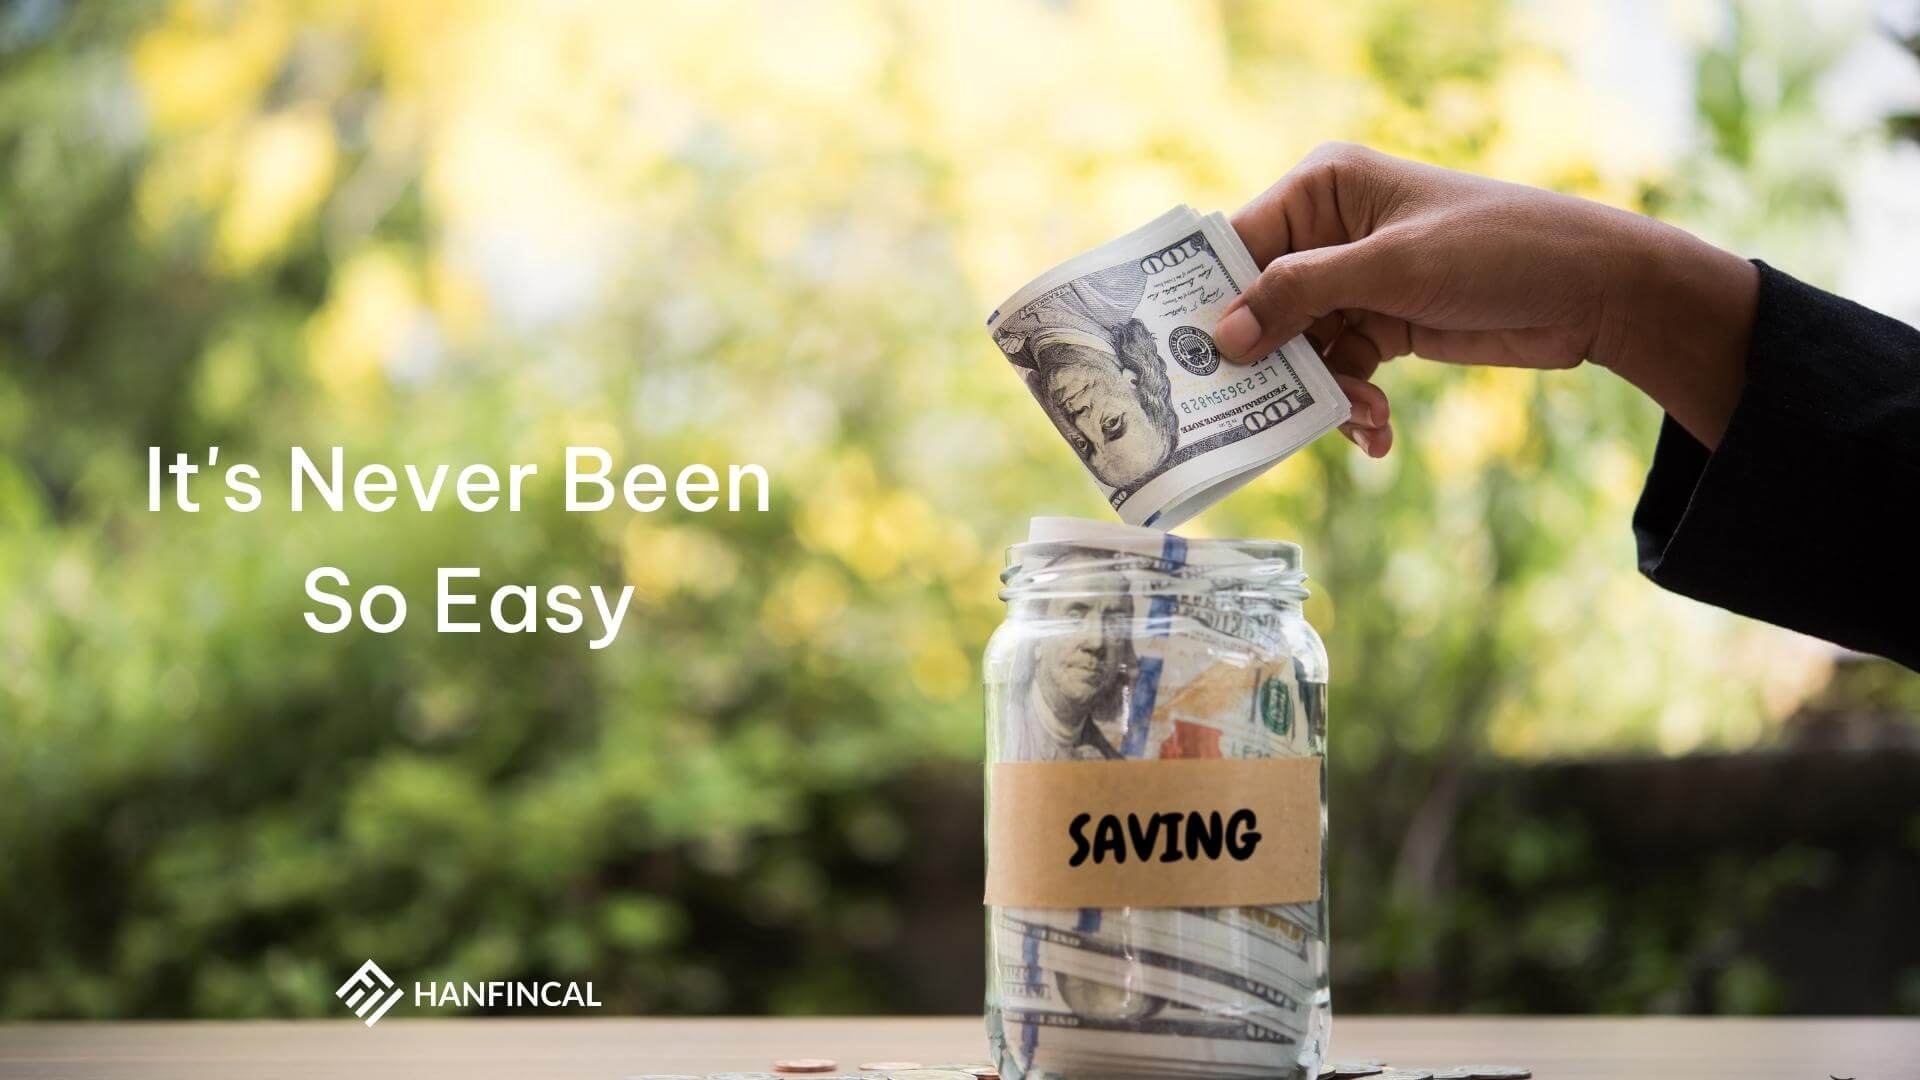 Saving money is never been so easy